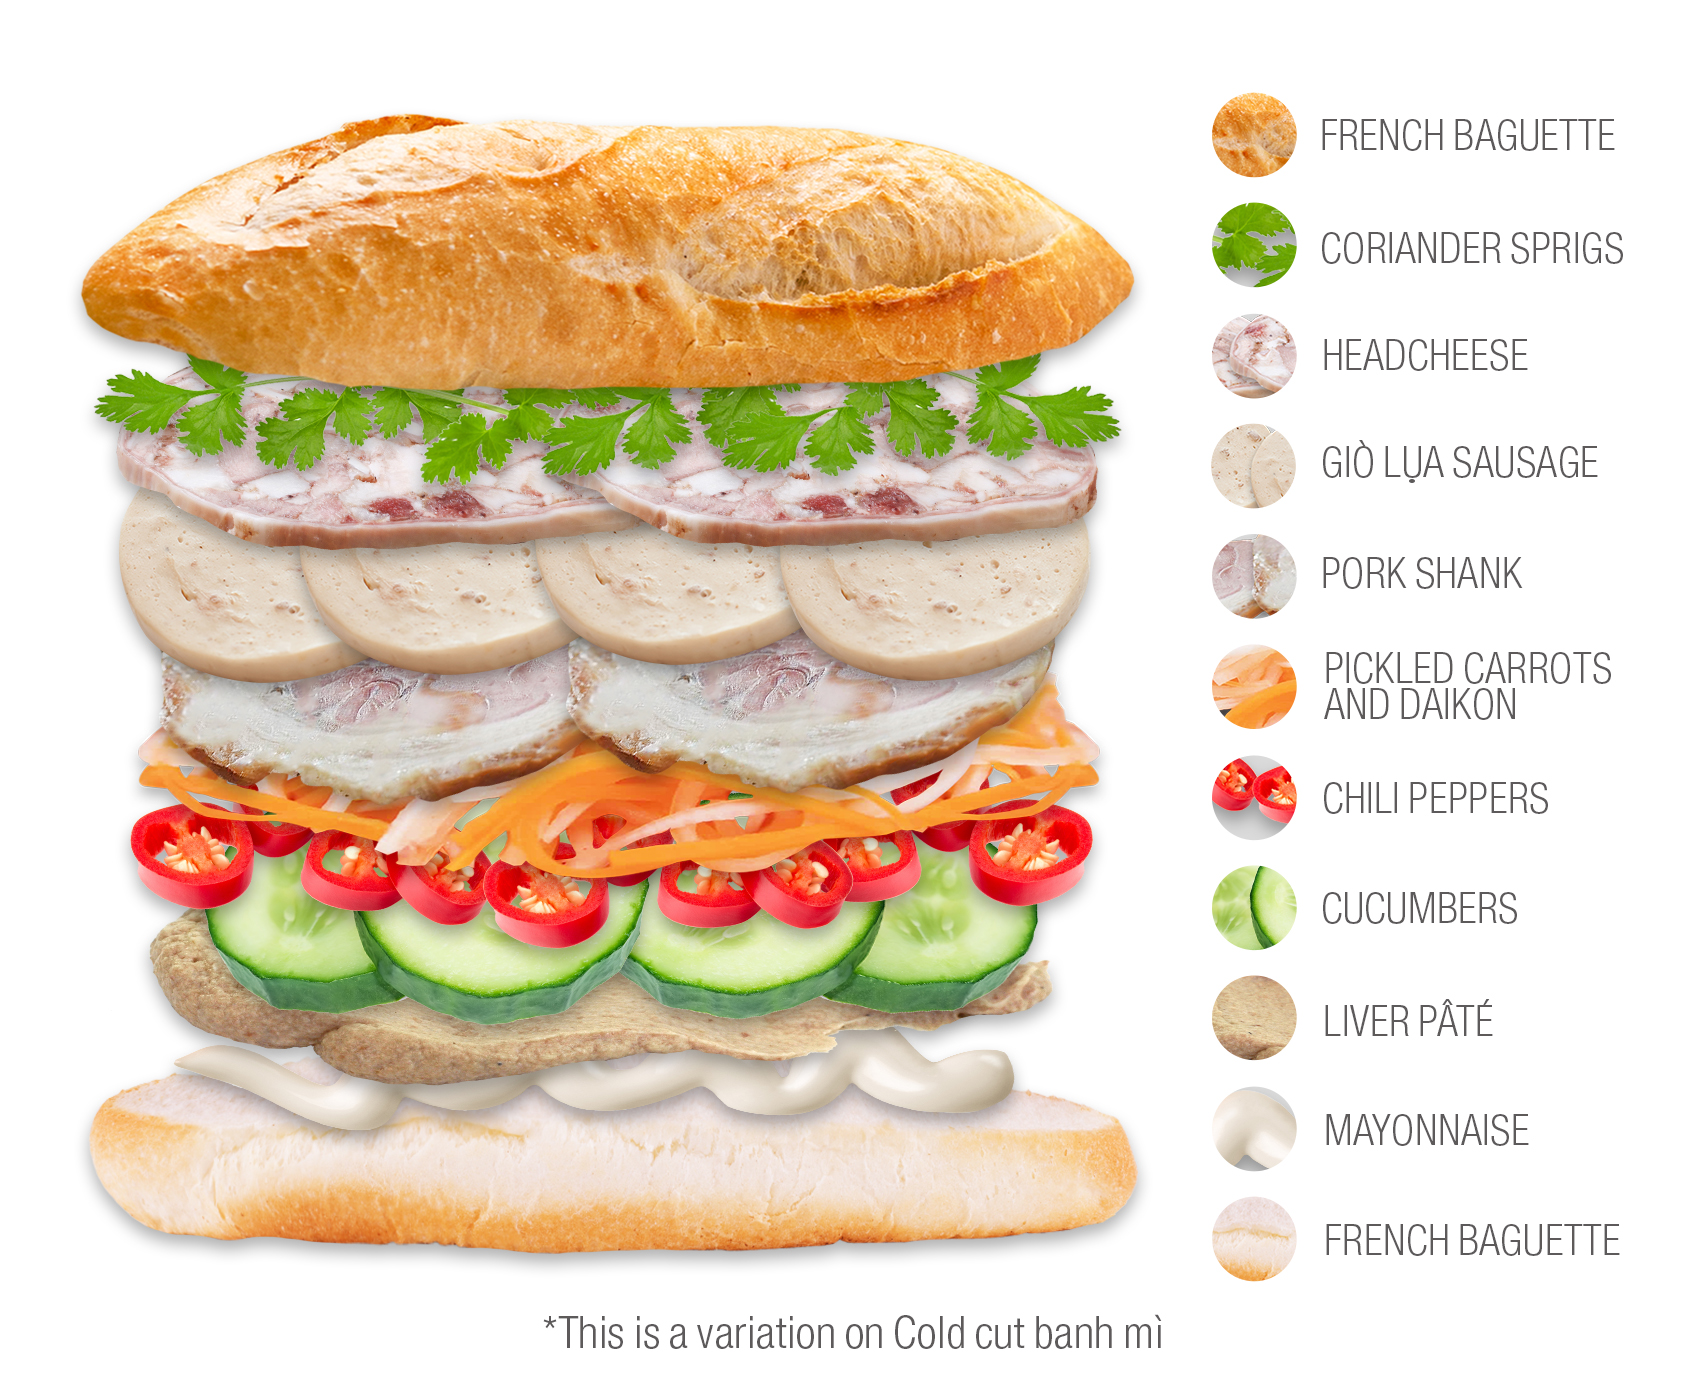 Our common fantasy sandwich